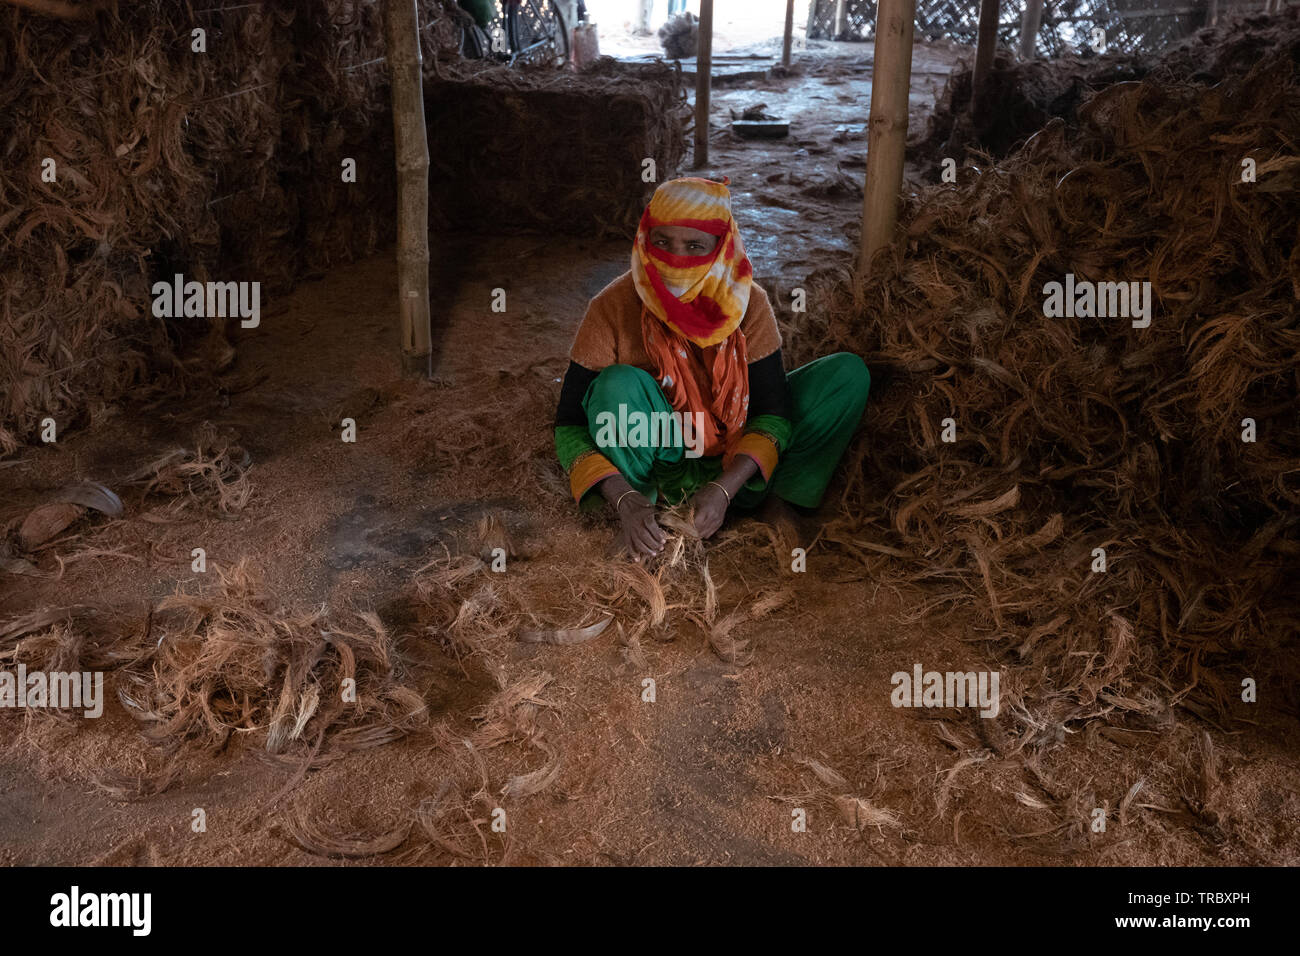 Harvesting coconut fiber from coconut shells in Bangladesh Stock Photo